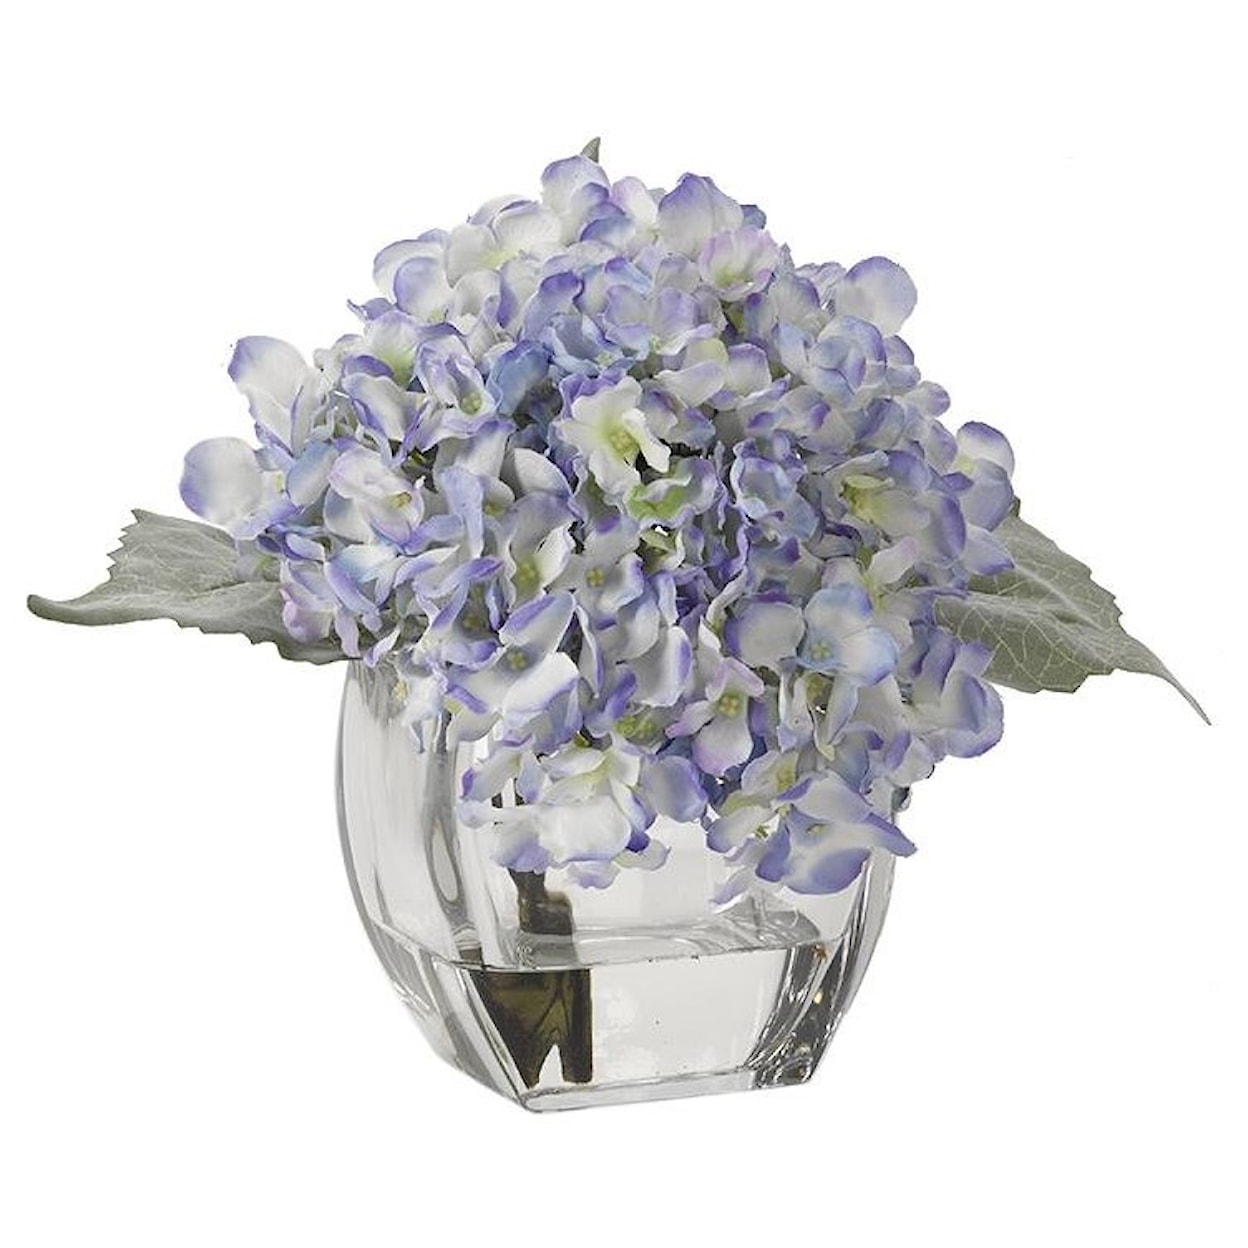 D&W Silks Florals and Botanicals Light Blue Hydrangea in Glass Cube